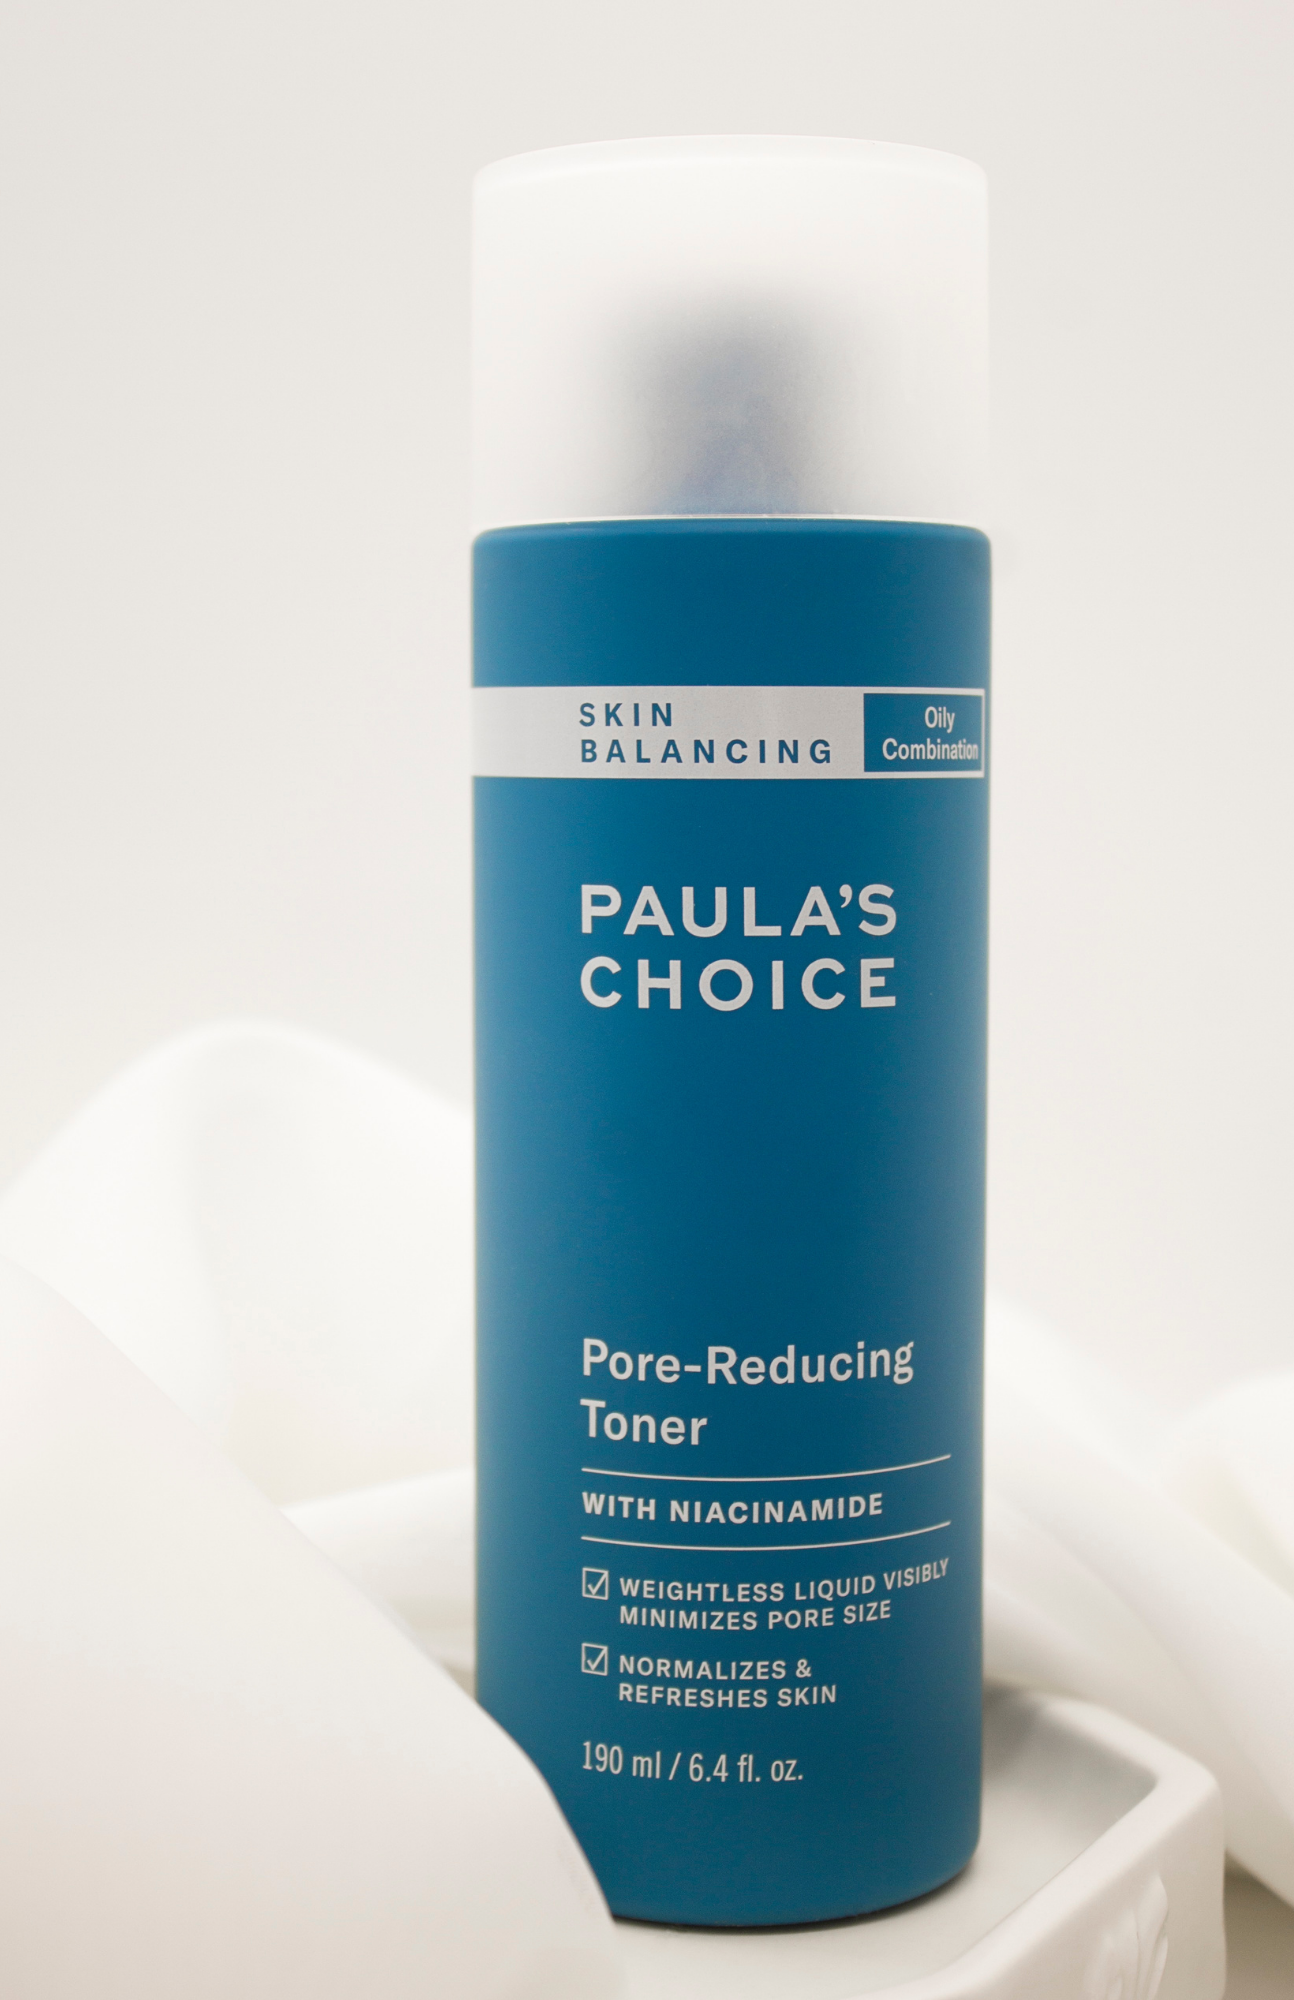 Paula's Choice Pore-Reducing Toner showcased in its elegant packaging.